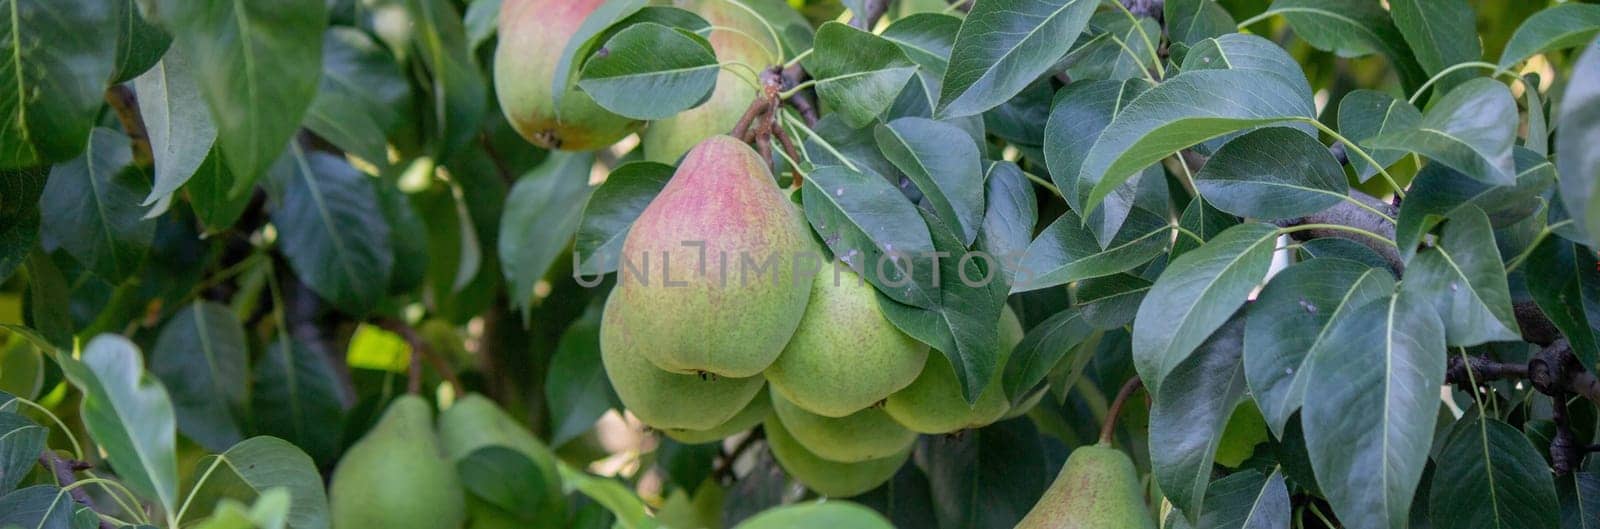 pears grow on a tree, harvest. Selective focus. by Anuta23